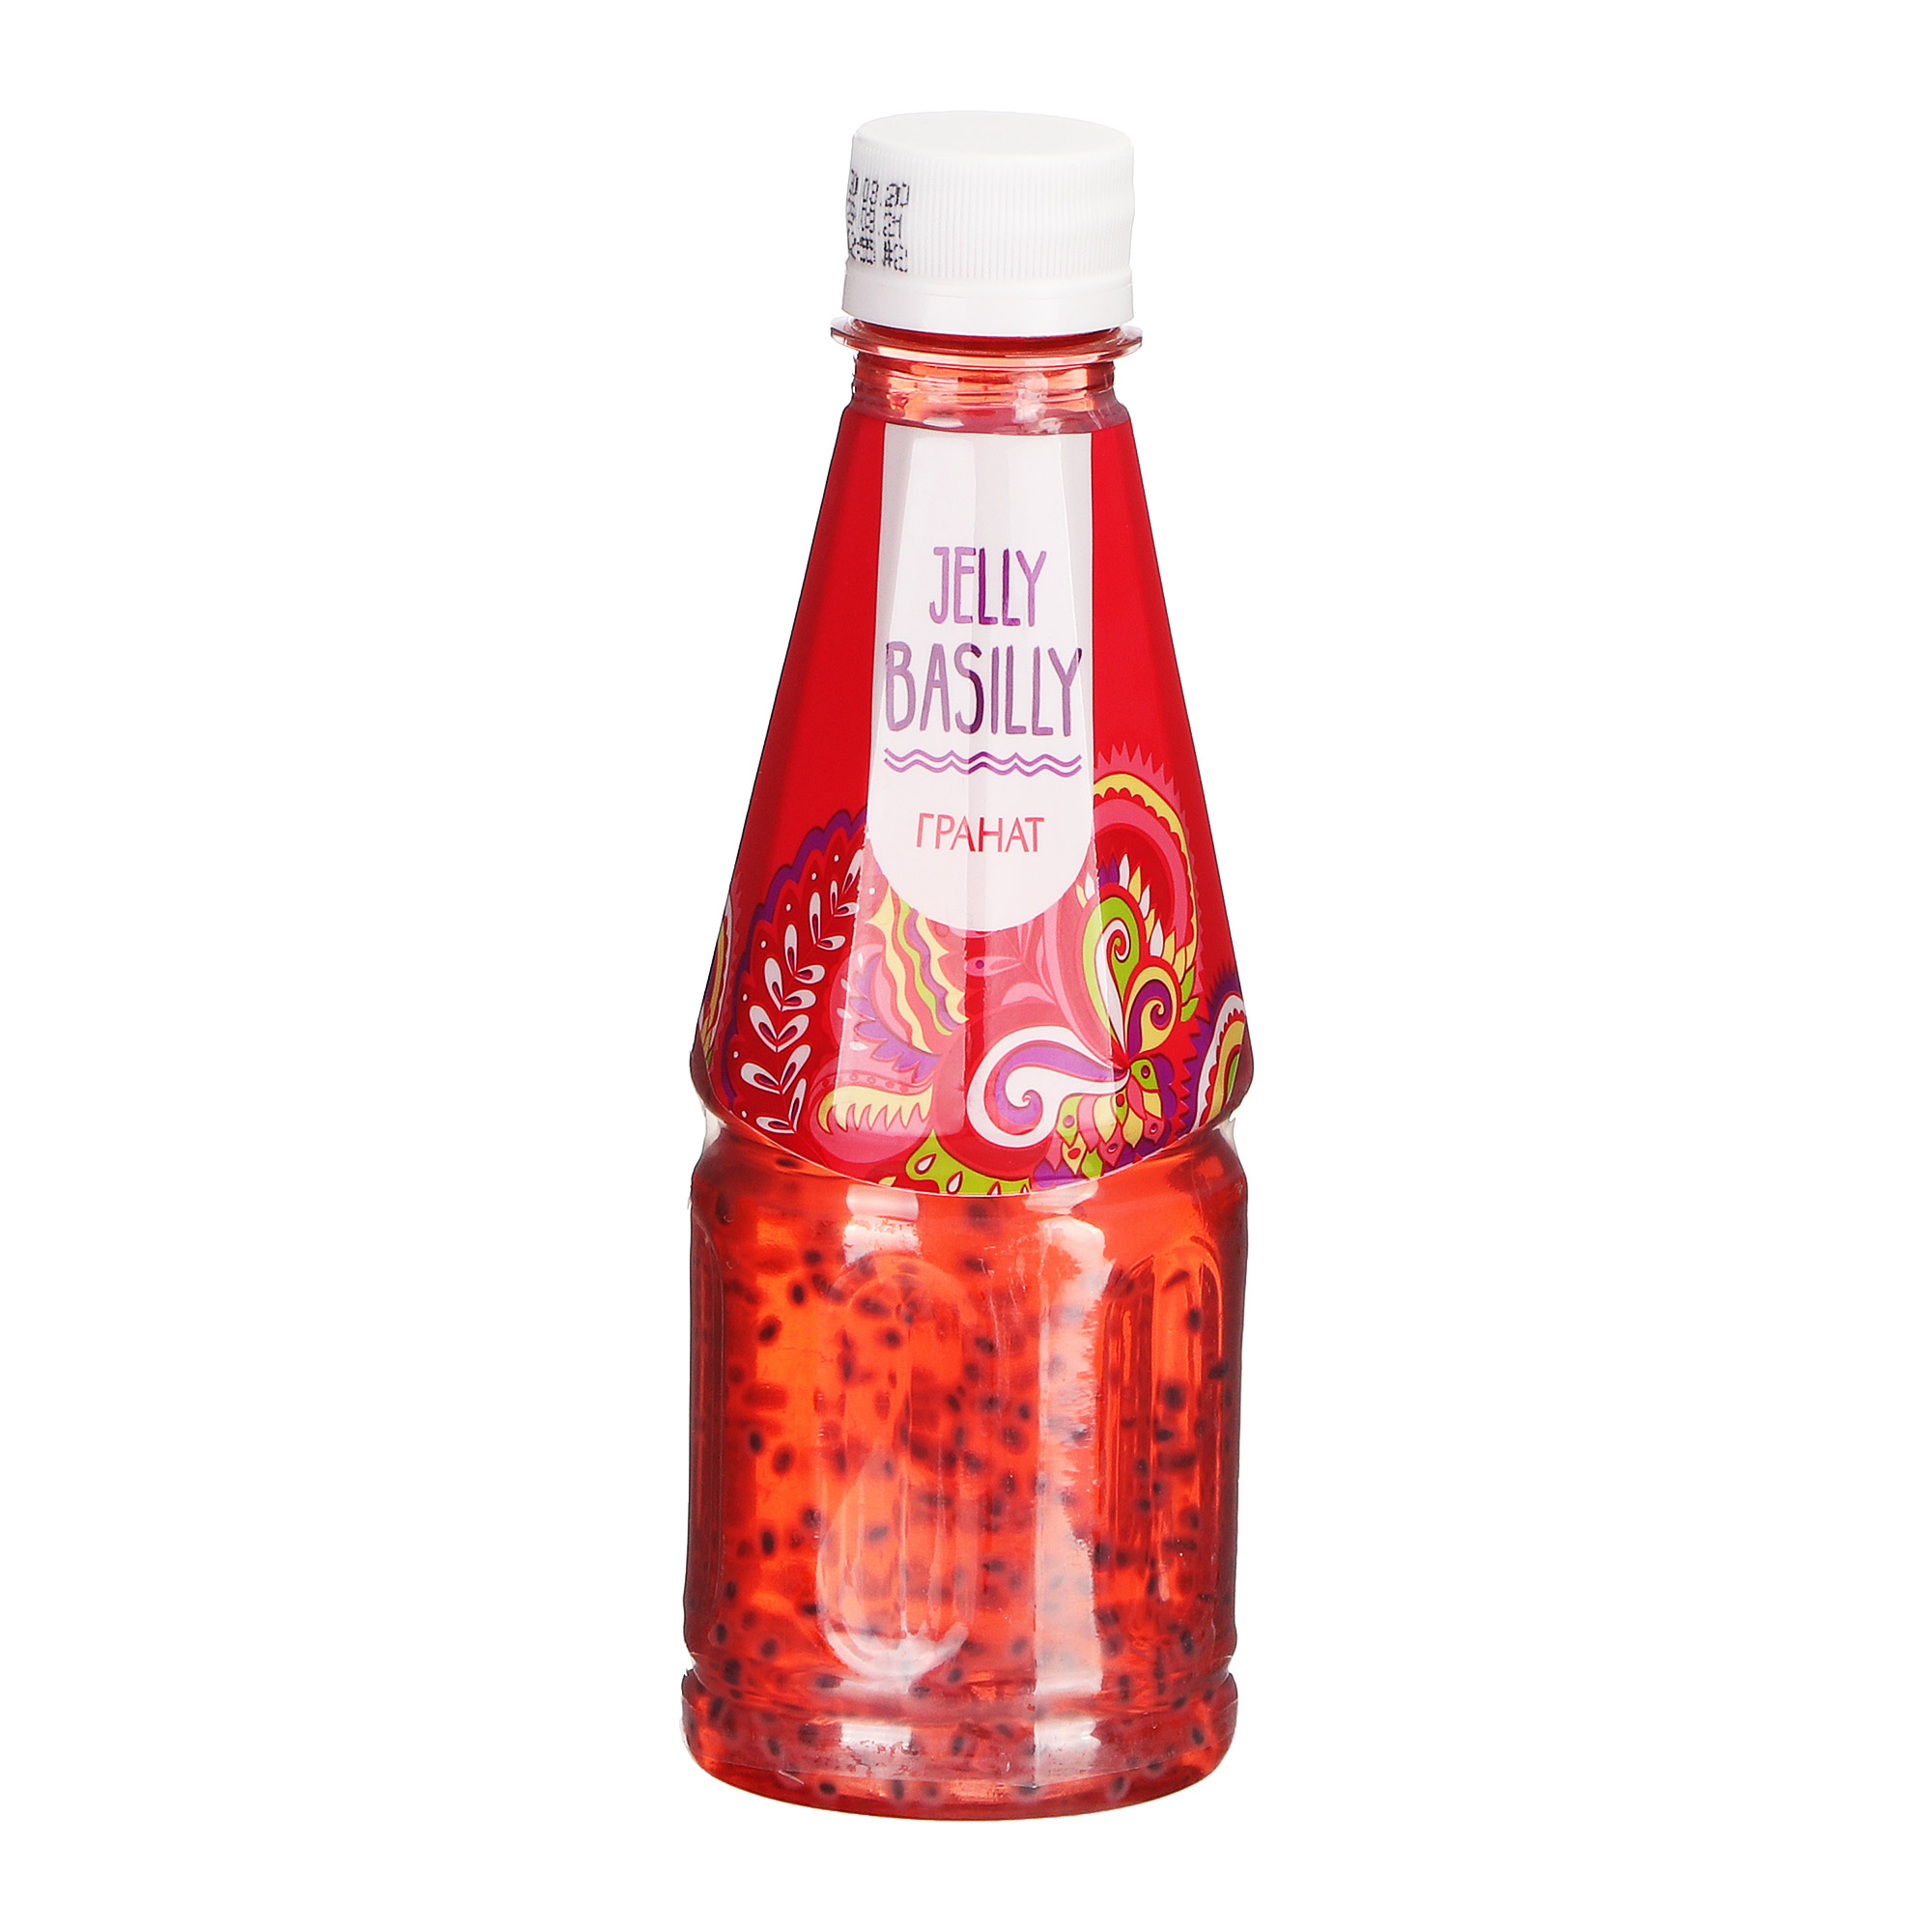 Напиток Jelly Basilly Базилик, гранат 300 мл сокосодержащий напиток rich dolce яблоки вишня грейпфрут с ароматом черешни 0 33 литра газ ж б 12 шт в уп